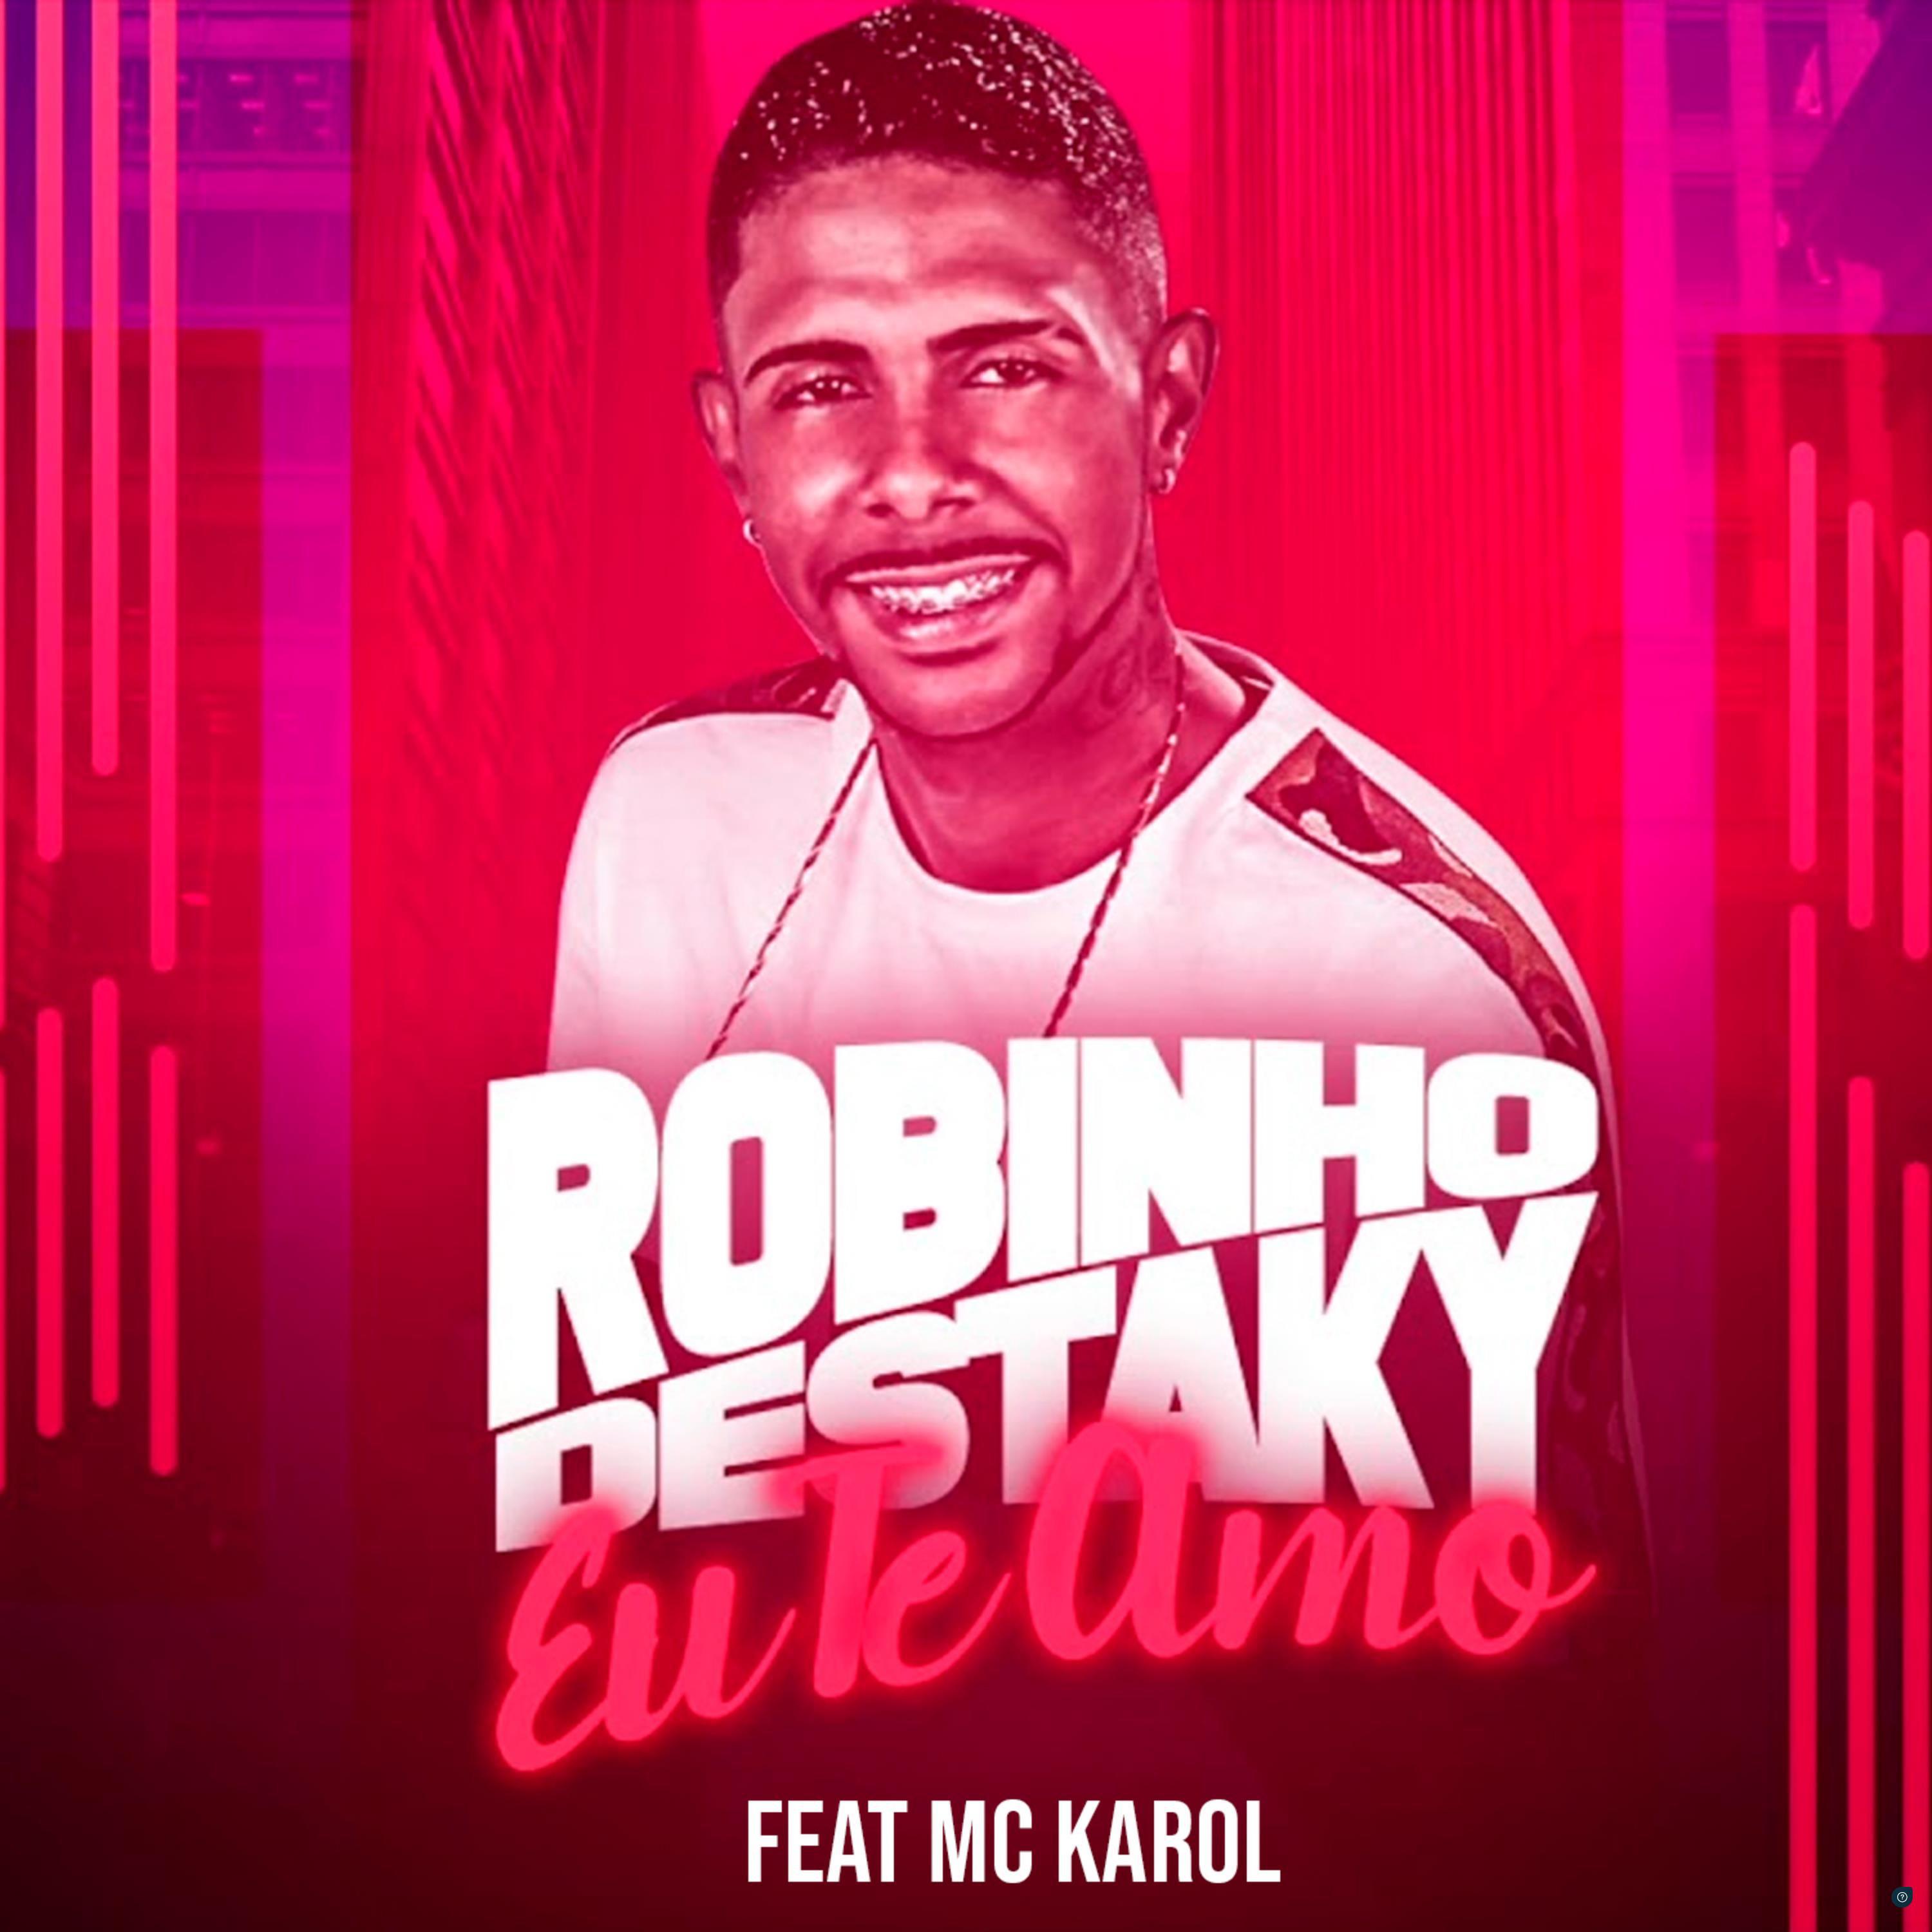 Robinho Destaky - Eu Te Amo (feat. MC Karol)